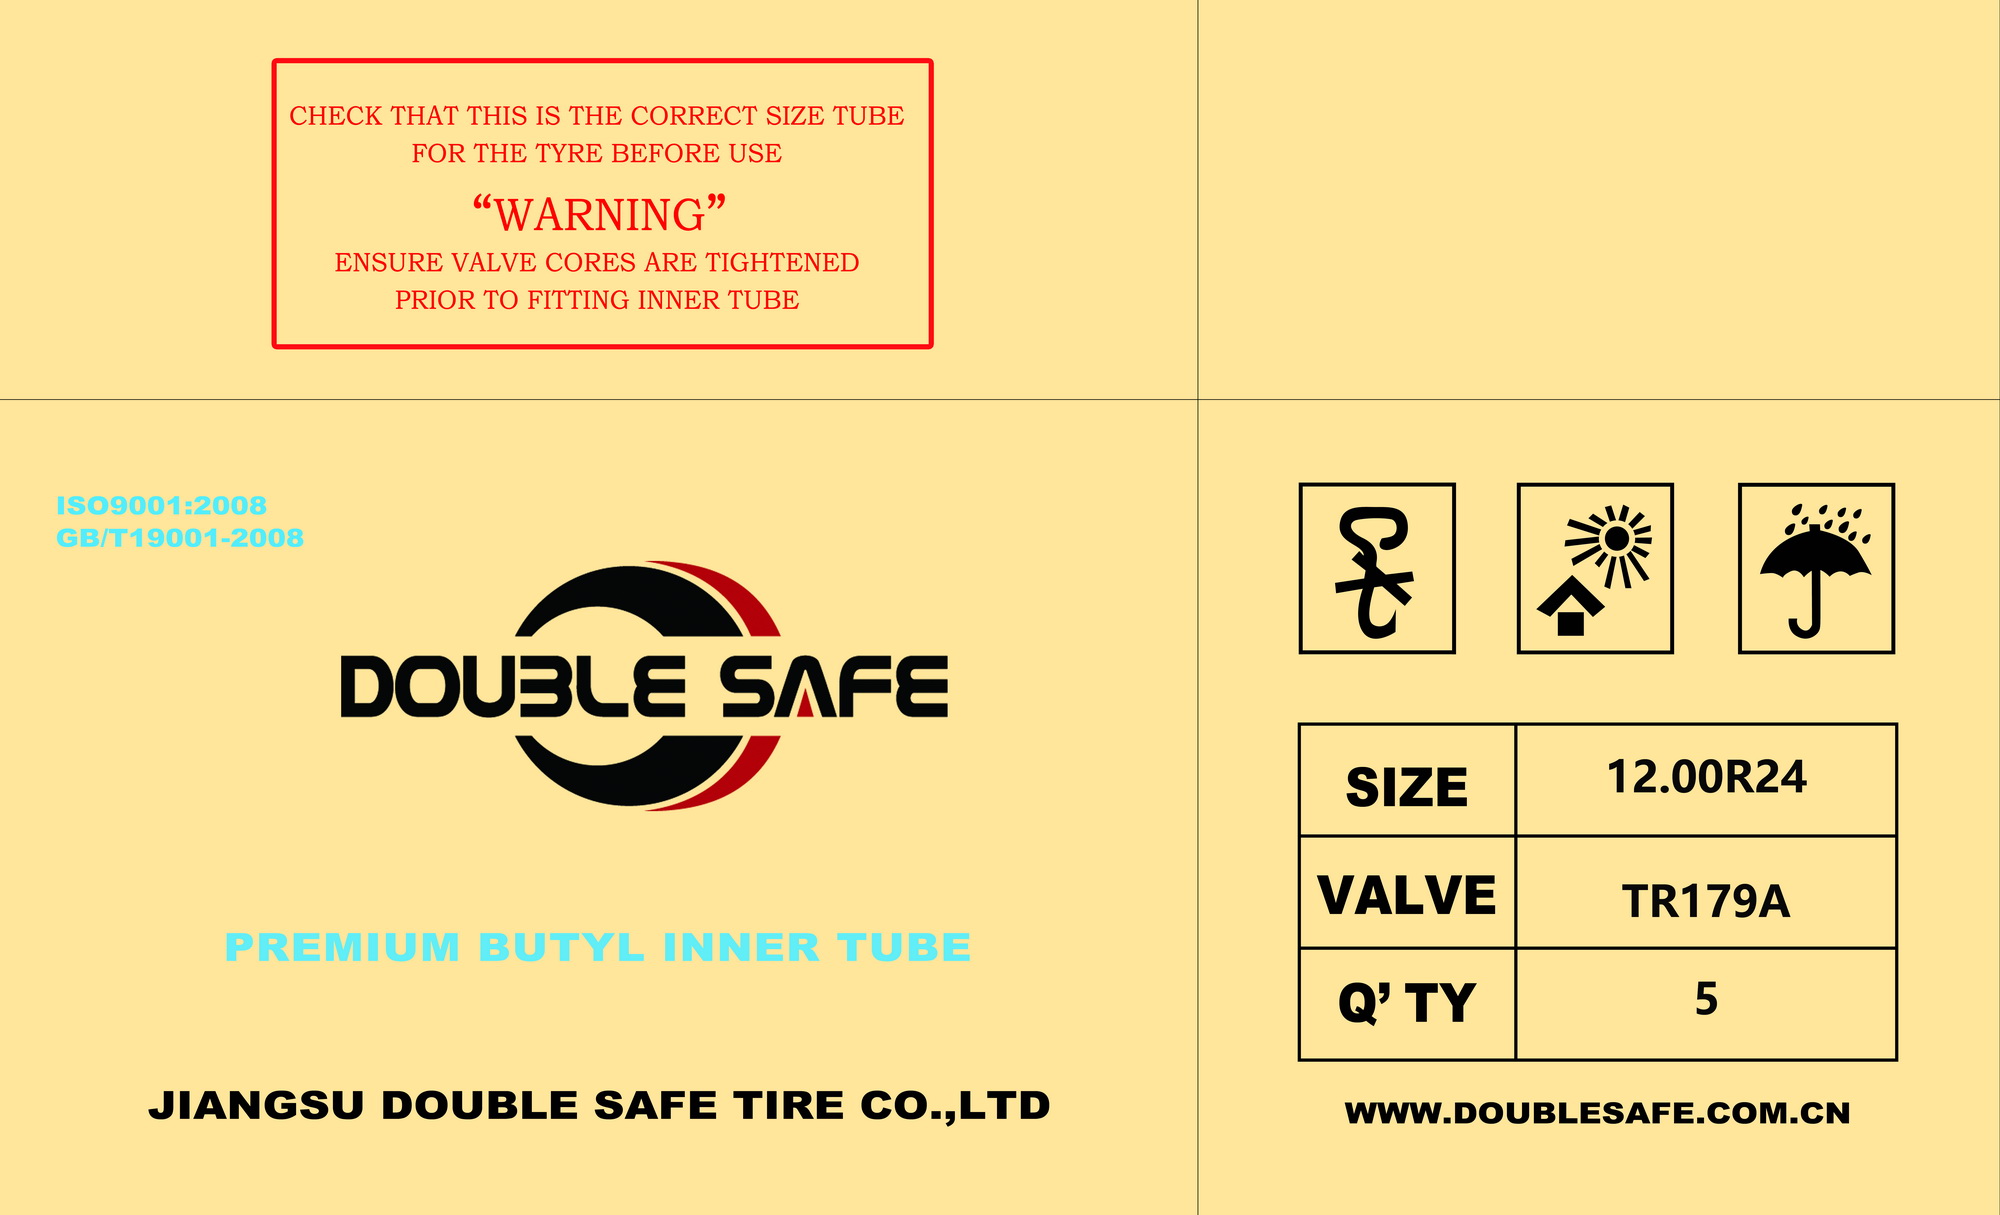 double safe butyl inner tube carton box 02